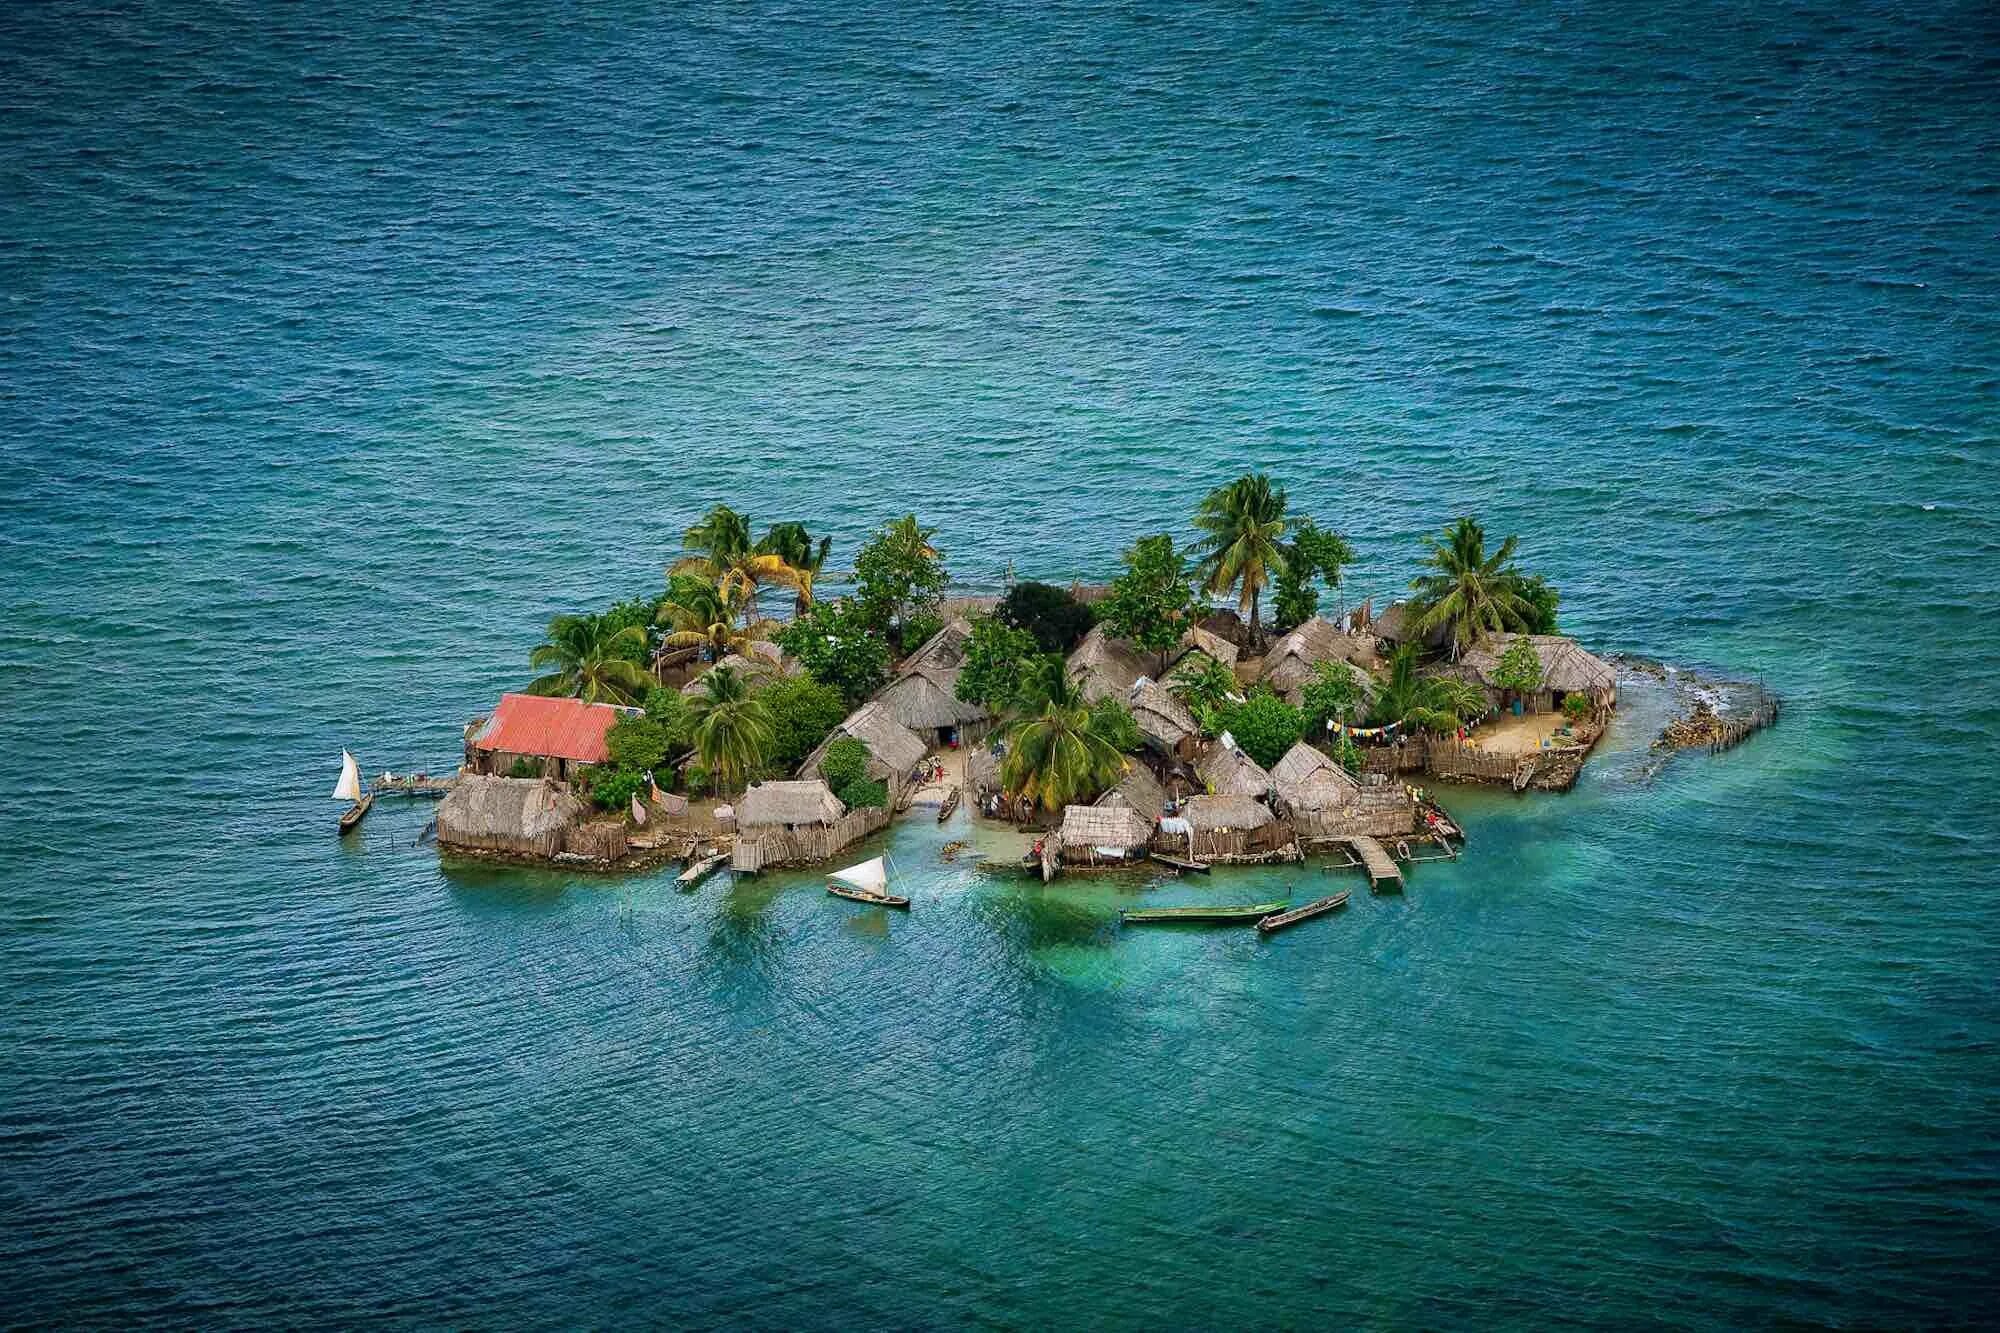 Остров сан. Острова Сан-Блас, Панама. Архипелаг Сан-Блас. Группа островов Сан Блас в Панаме. Коморские острова (архипелаг).